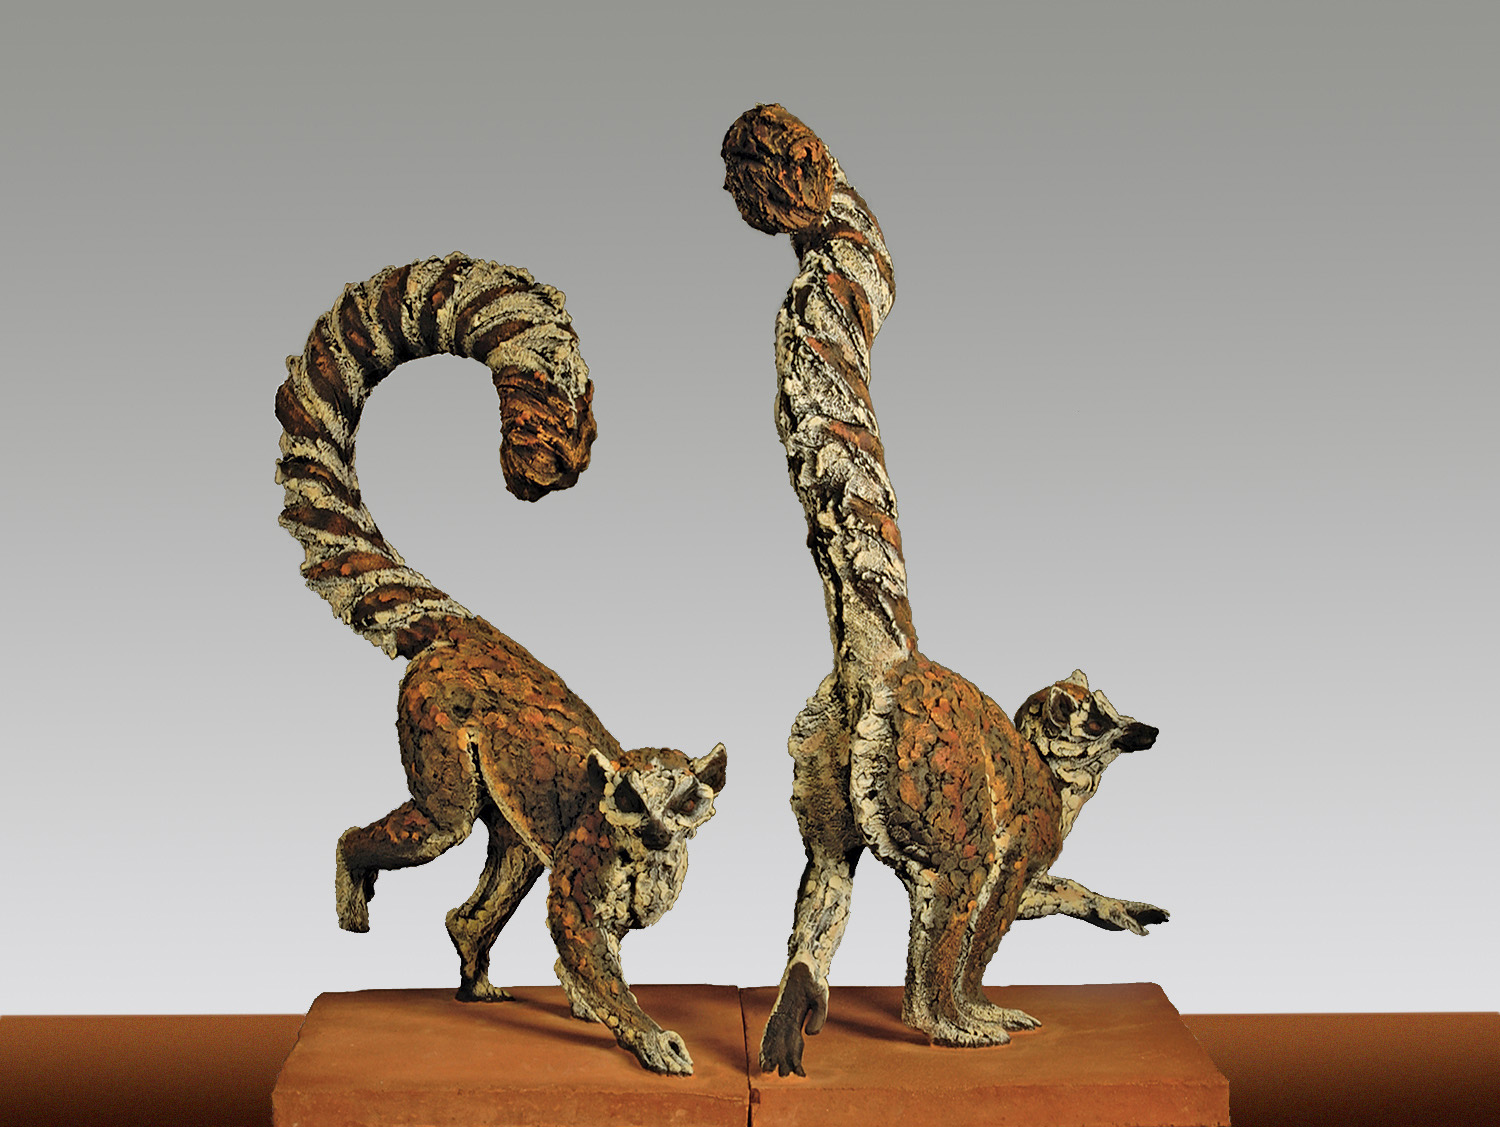   Ring Tailed Lemurs &nbsp; ©&nbsp;    Text☰    